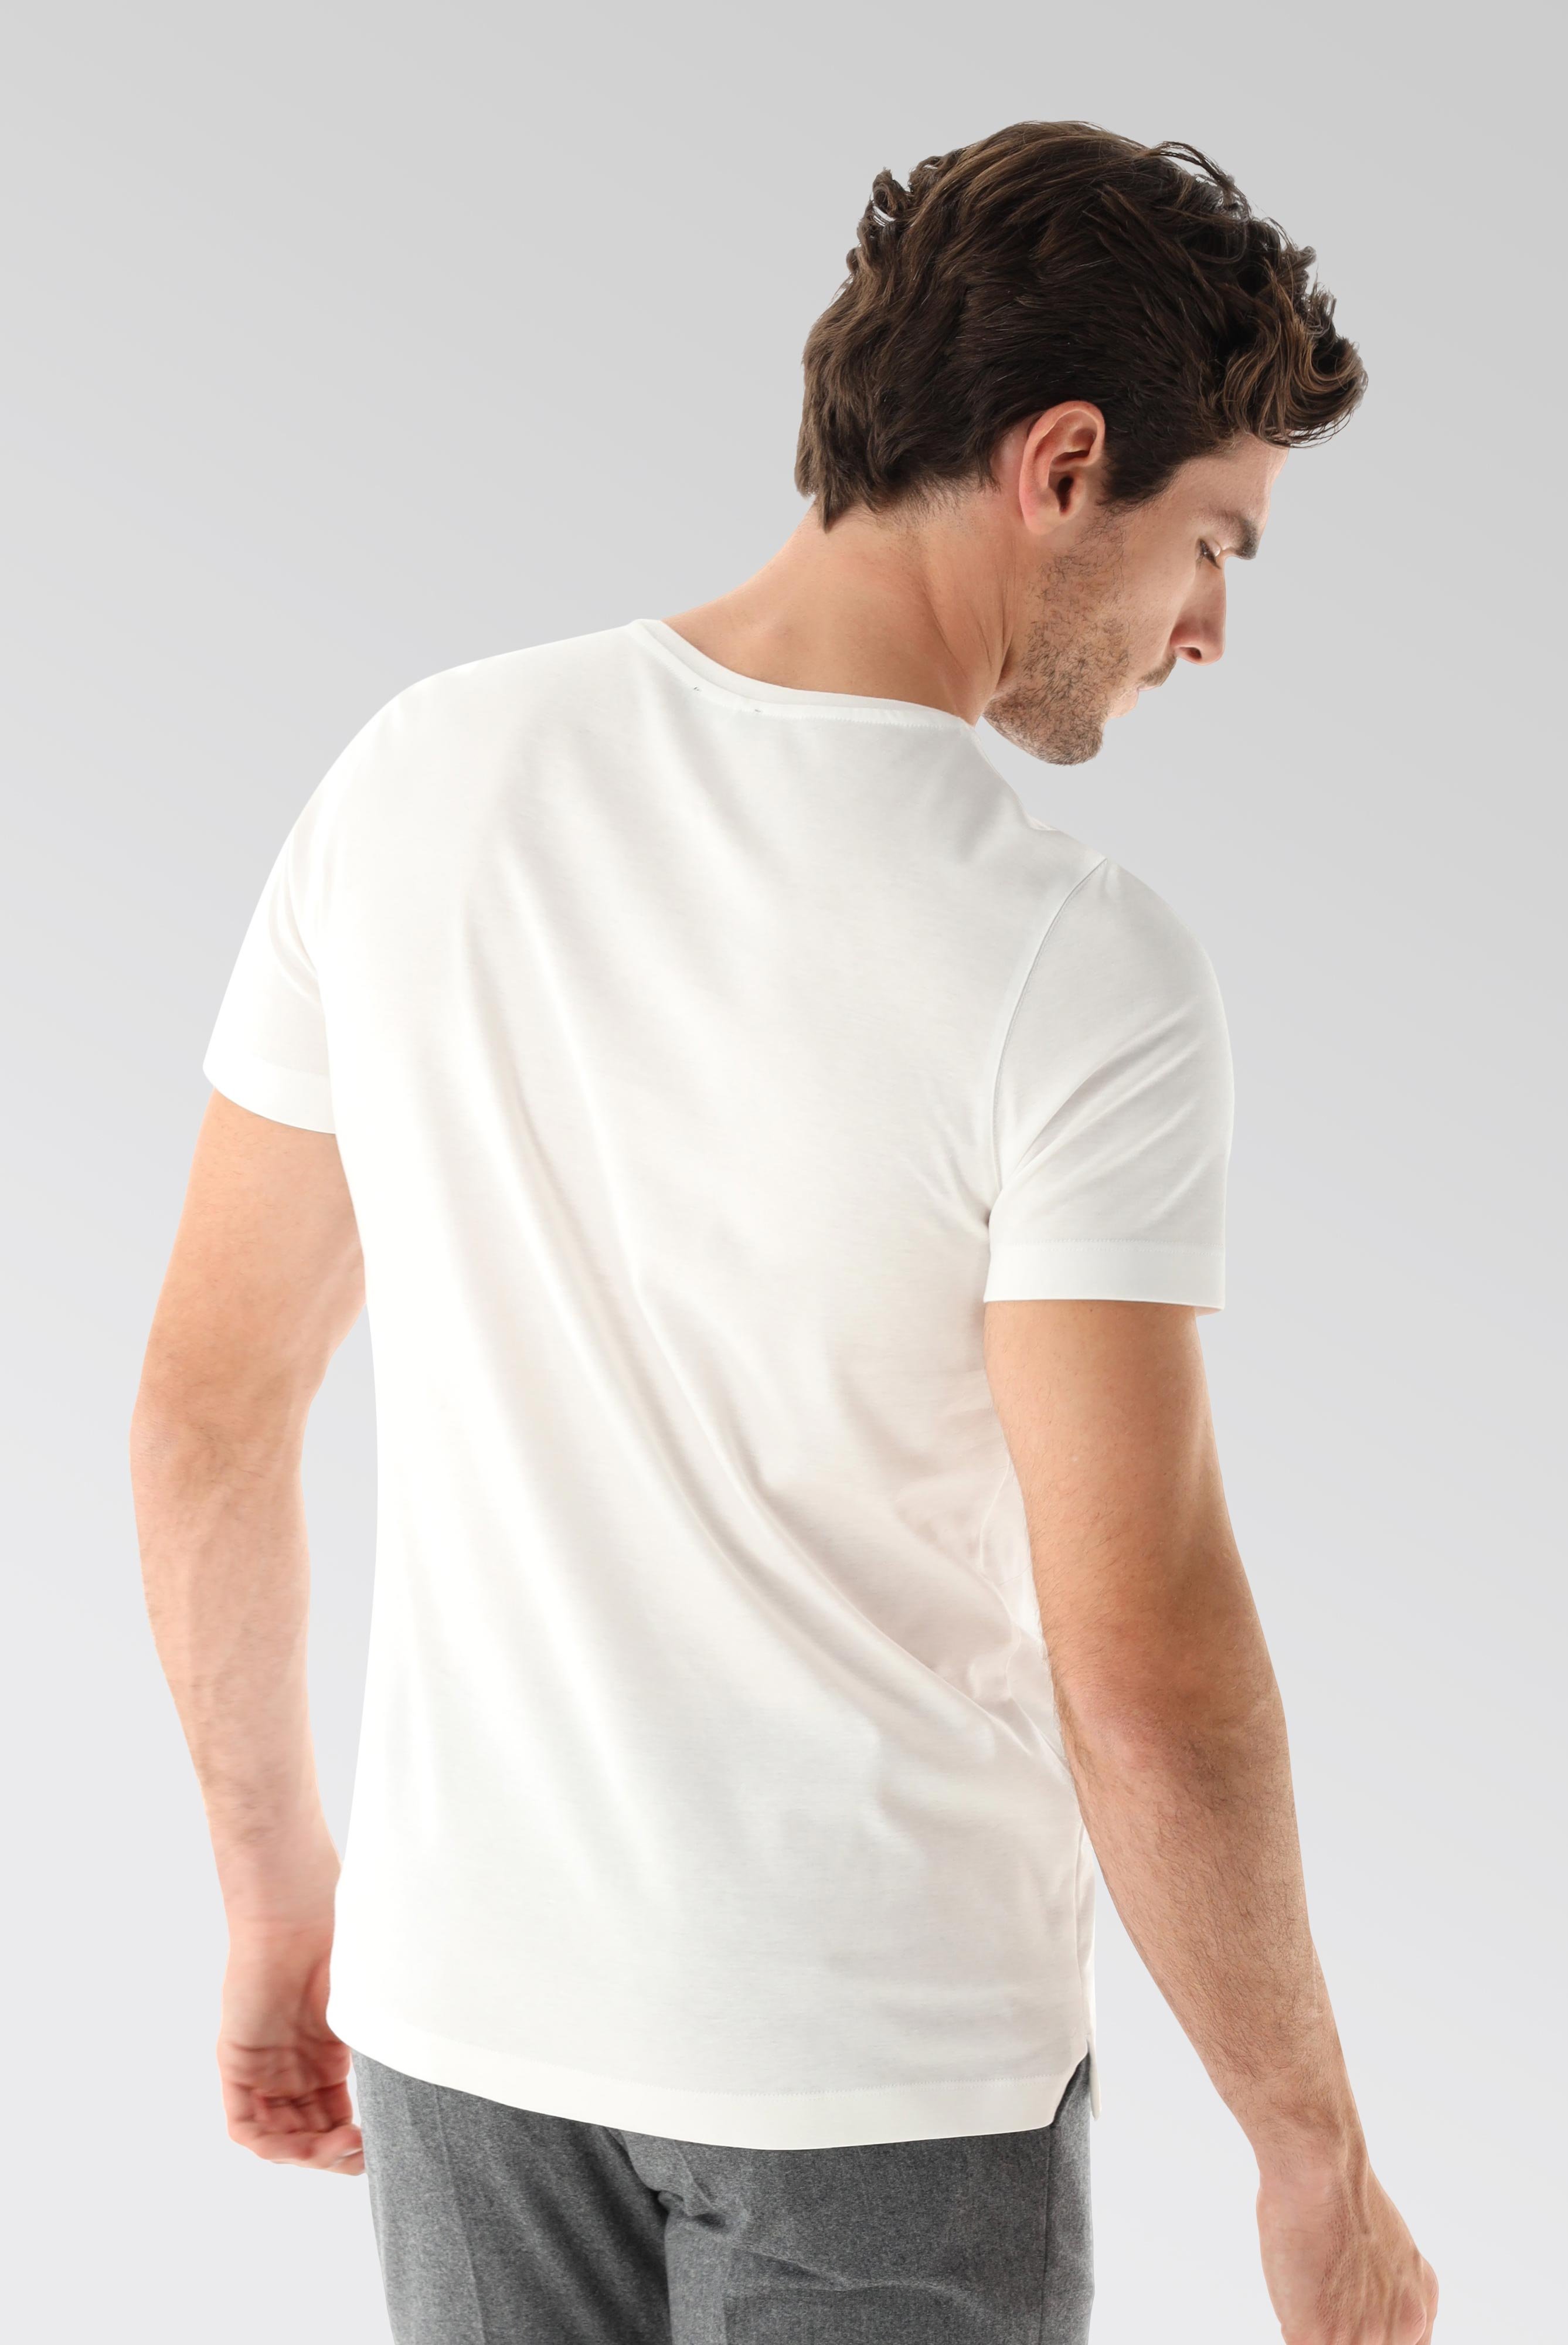 T-Shirts+Swiss Cotton Jersey V-Neck T-Shirt+20.1715.UX.180031.000.XL